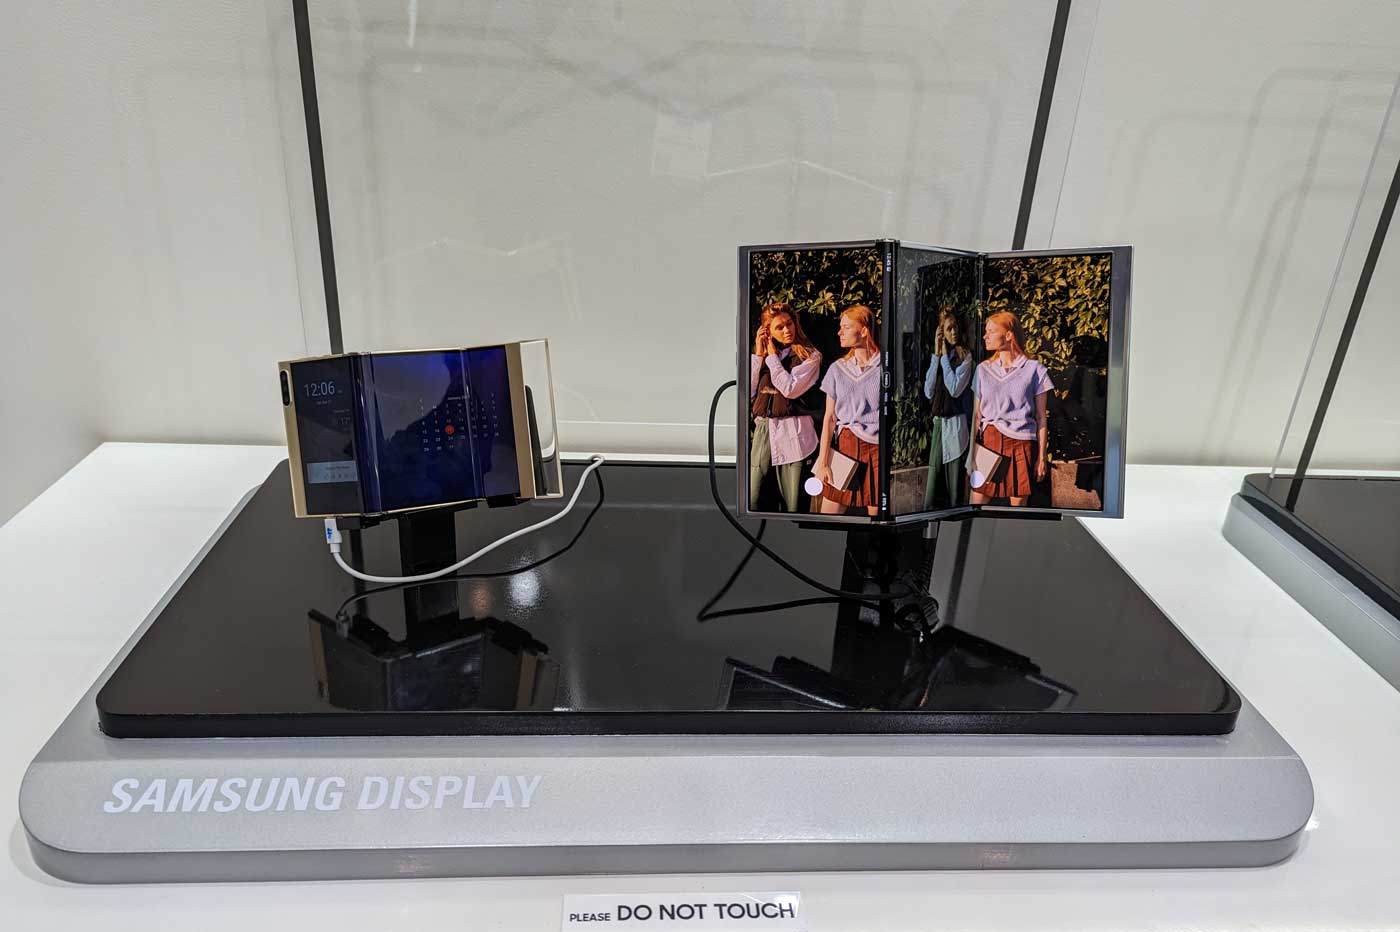 Samsung Display MWC 2023